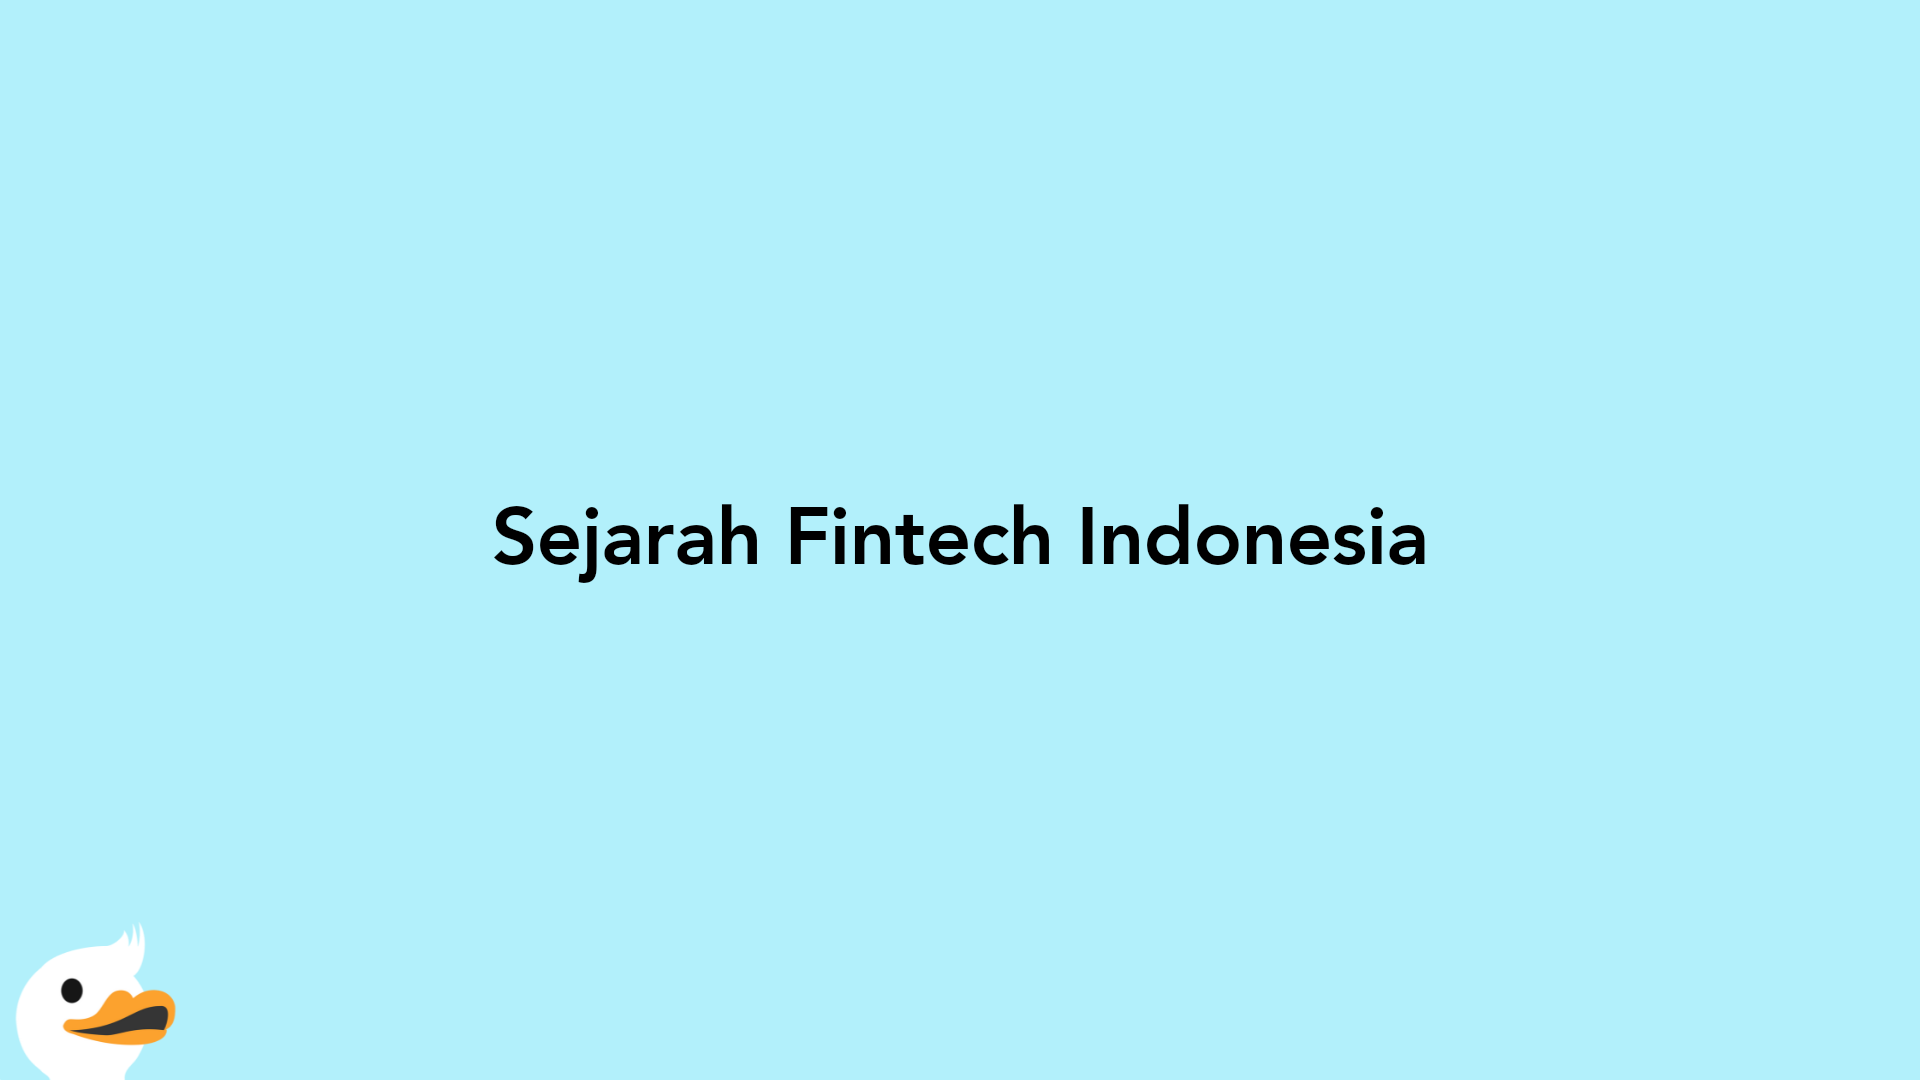 Sejarah Fintech Indonesia